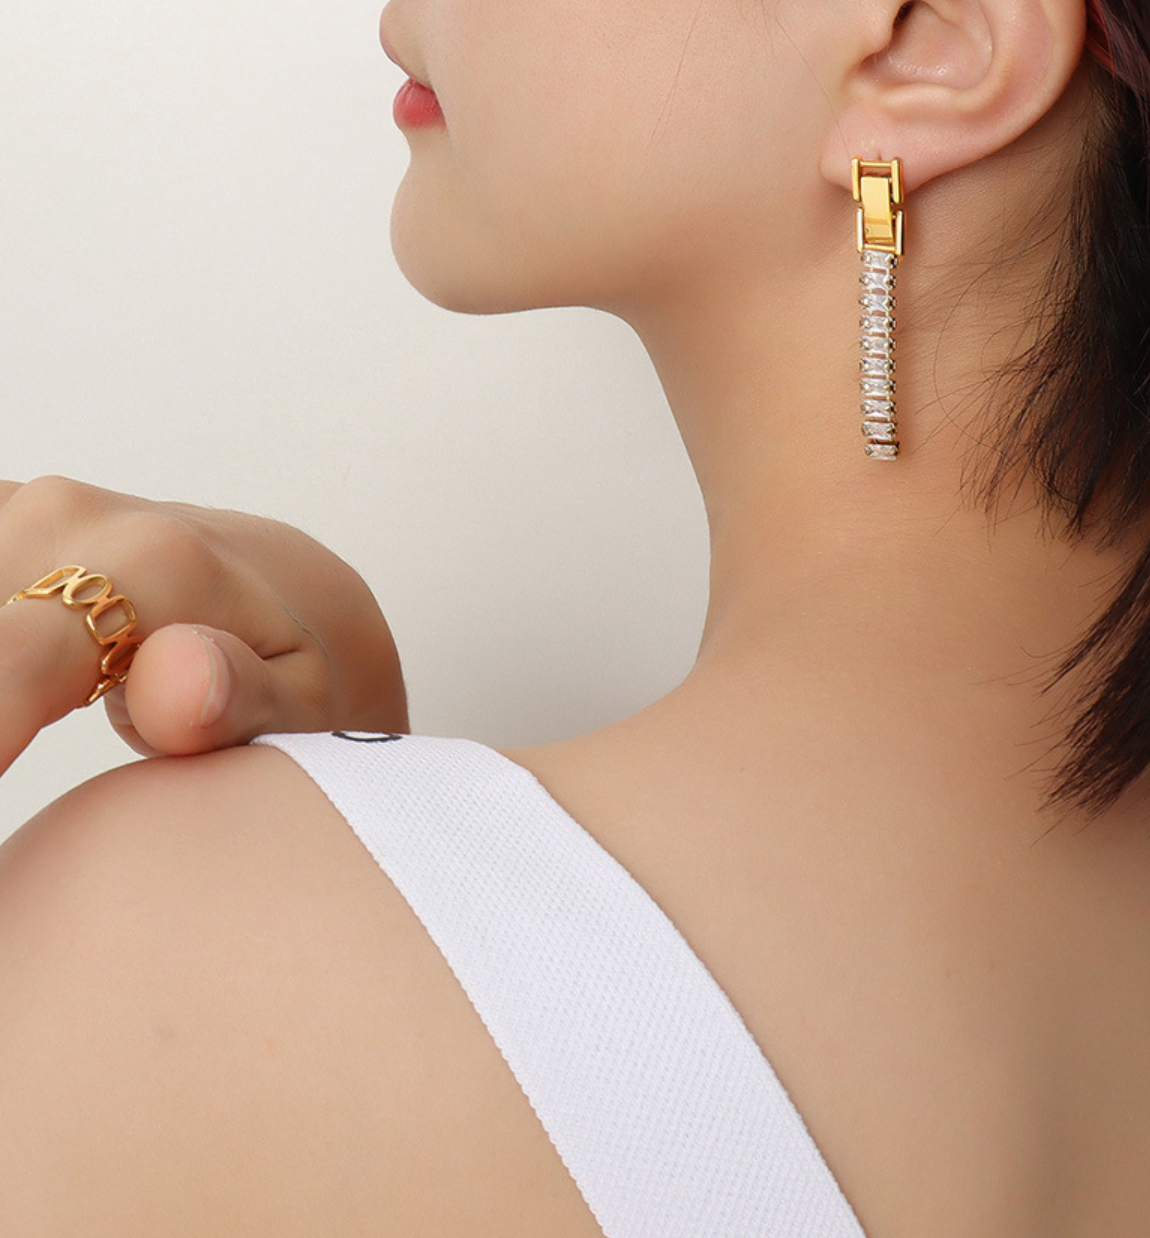 Bond's Gold and Diamond Drop Studs Earrings - Fashion Jewelry  | Chic Chic Bon